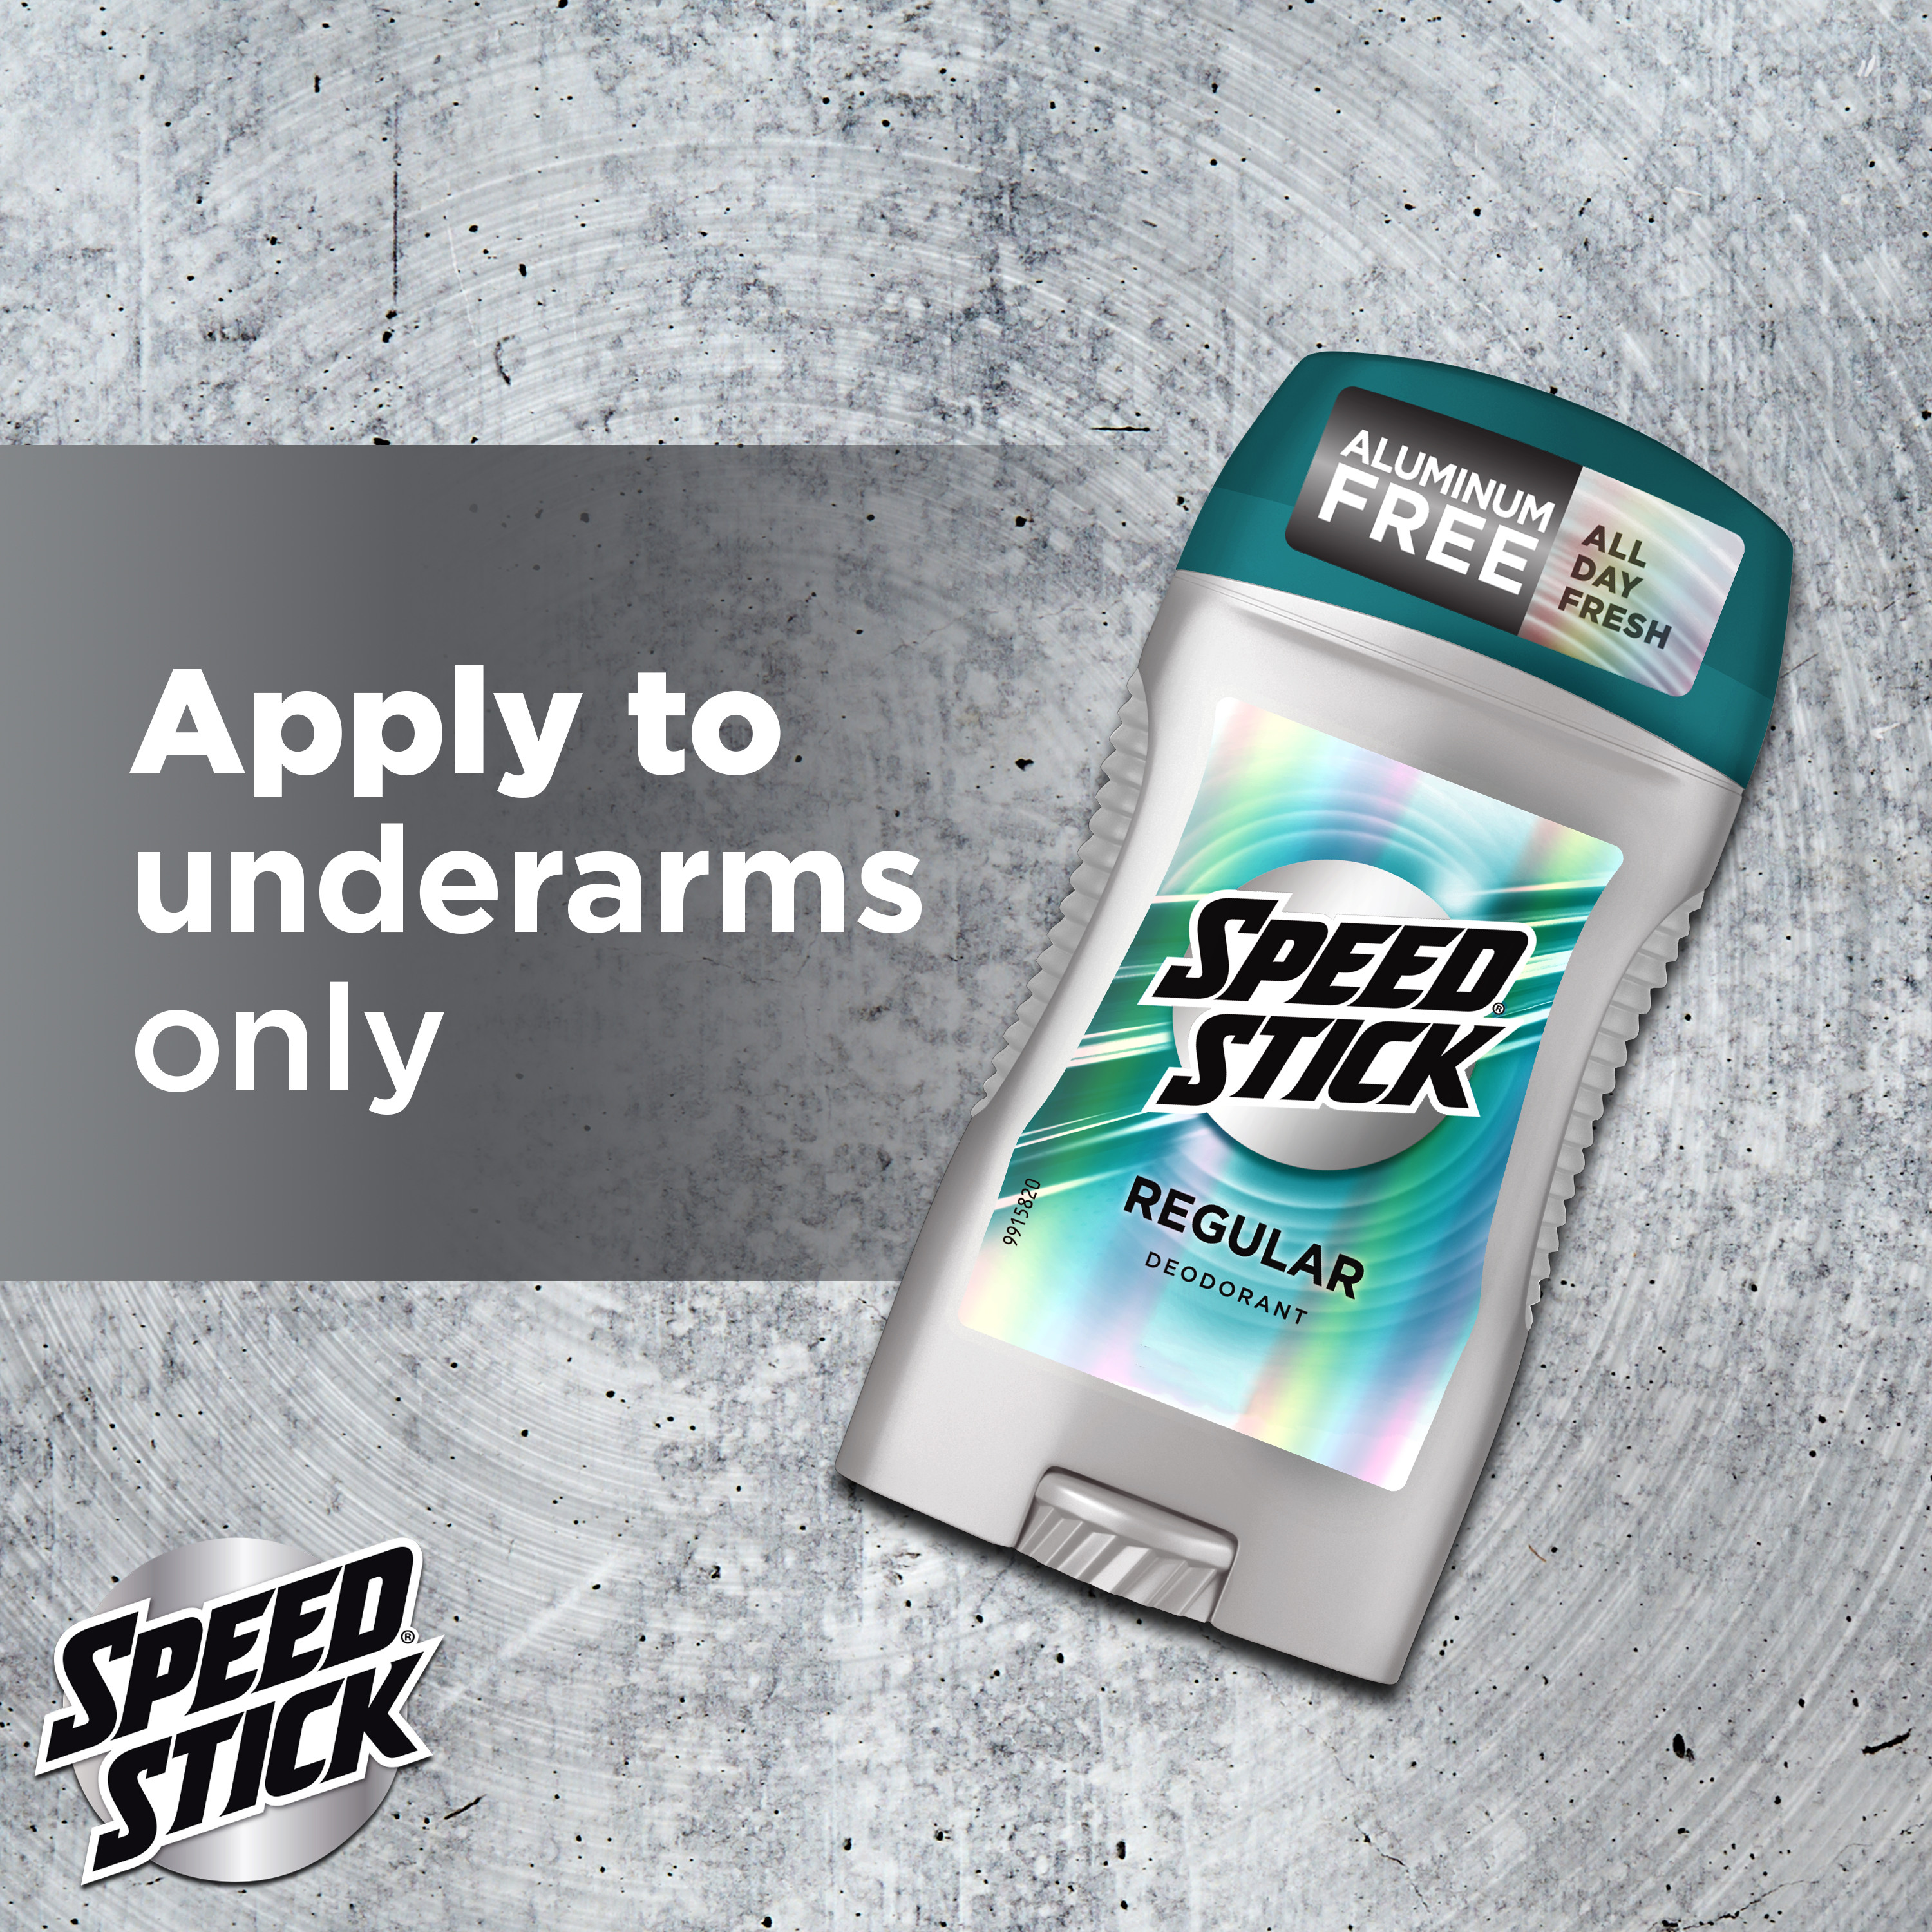 Speed Stick Deodorant for Men, Regular - 3 ounce (4 Pack) - image 9 of 17